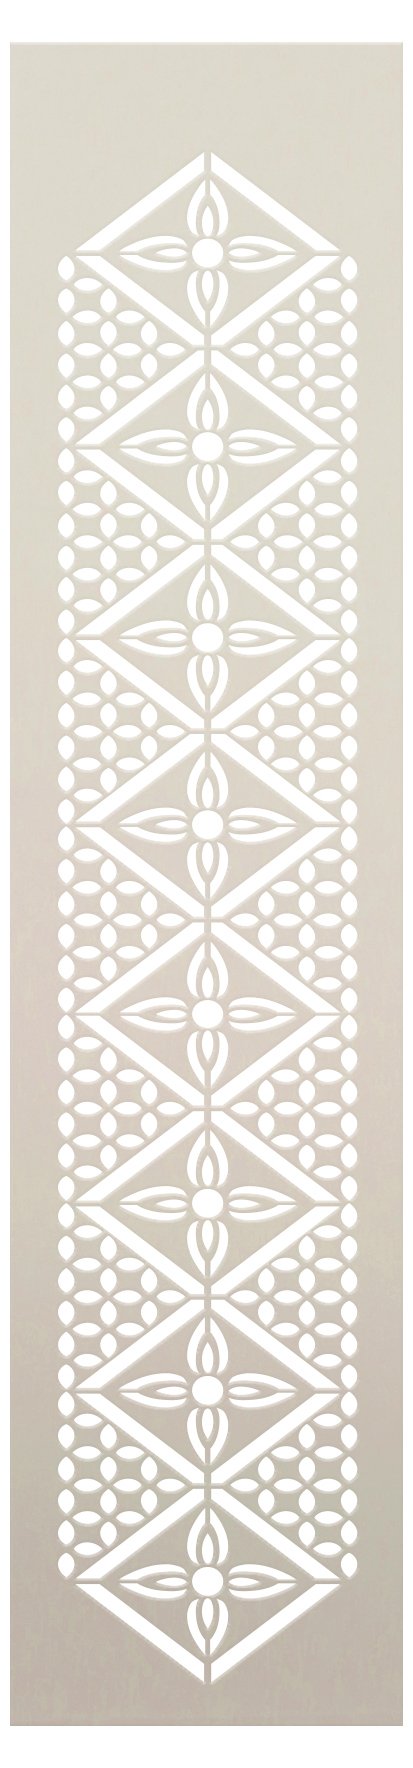 Medieval Leaf Diamond Band Stencil by StudioR12 | Craft DIY Flower Petal Backsplash Home Decor | Paint Wood Sign Reusable Mylar Template | Select Size | STCL5811